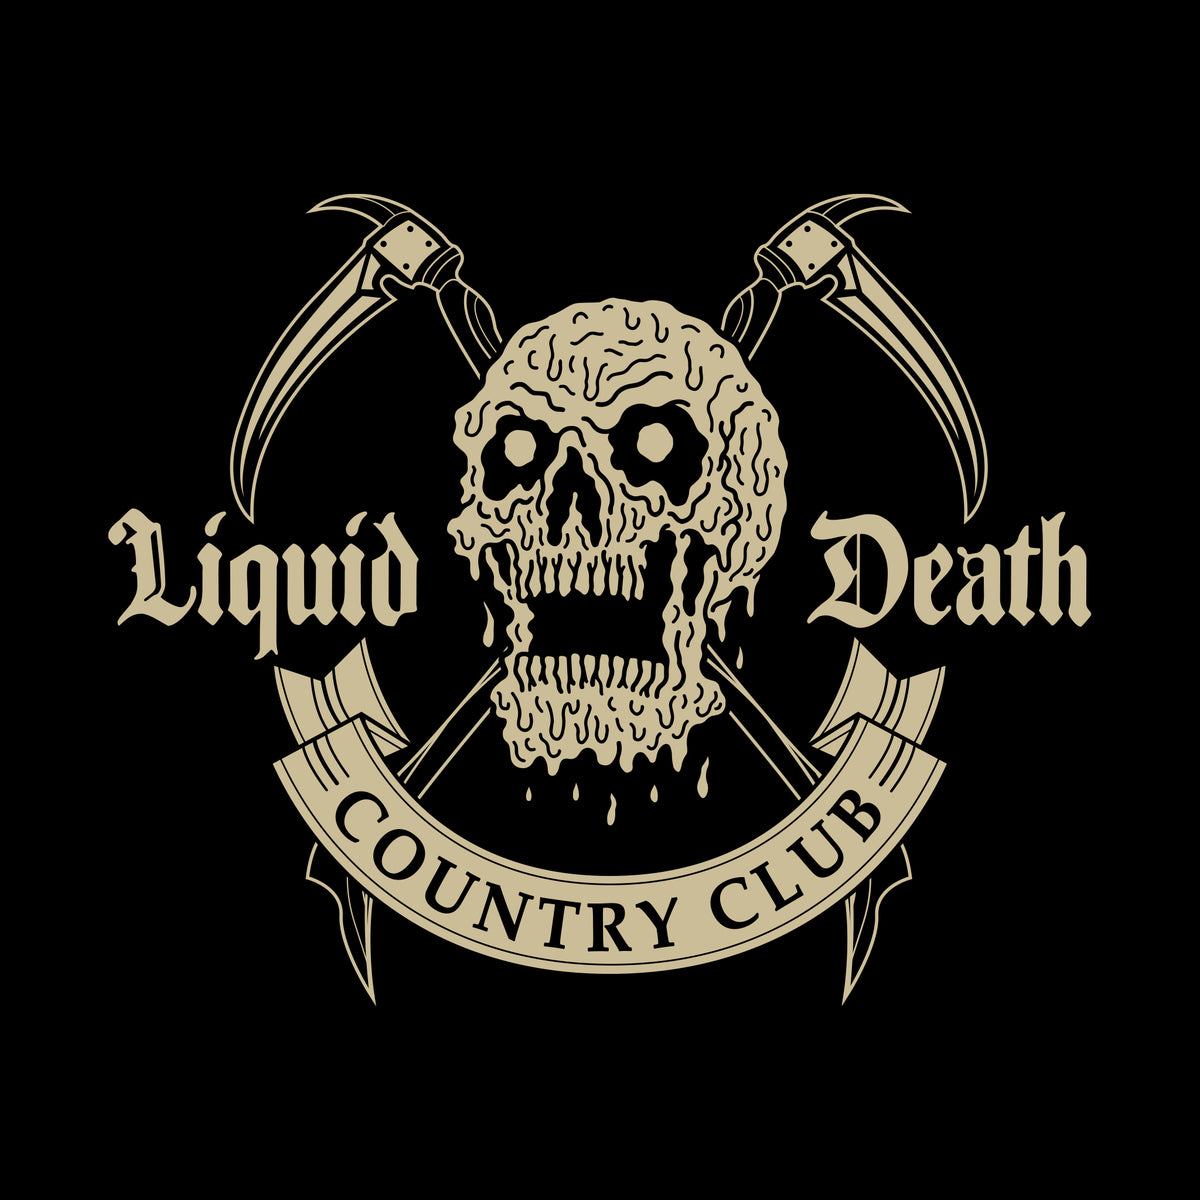 Country Club Membership